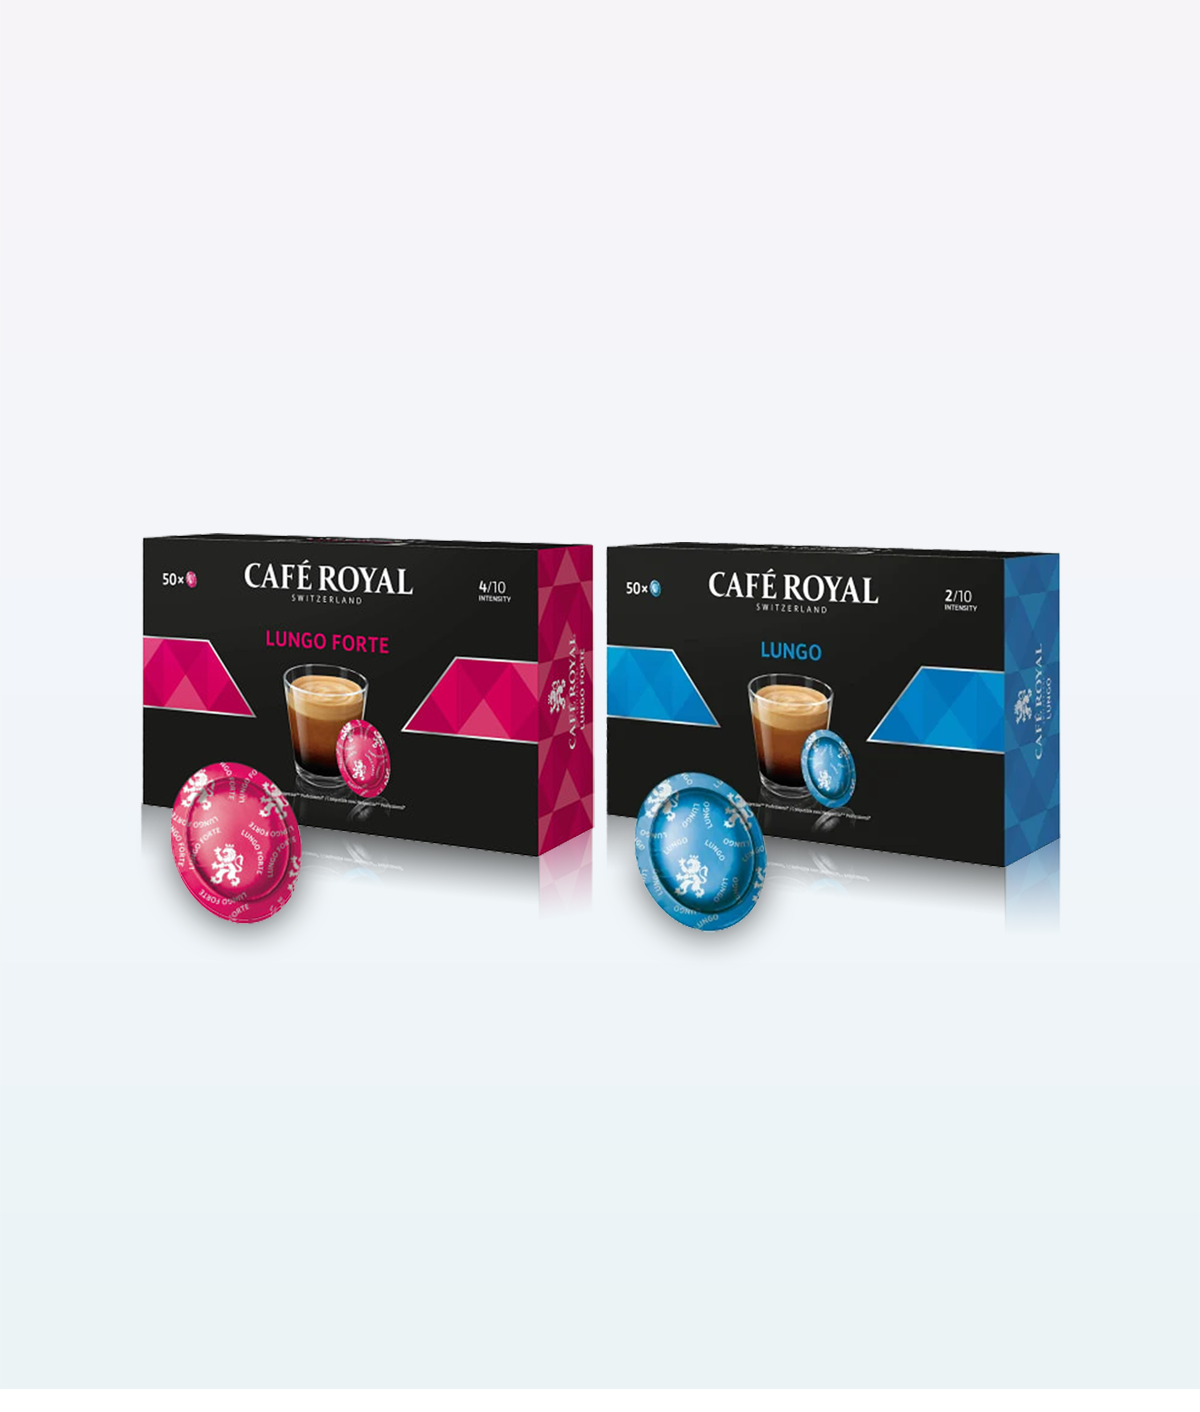 CAFE ROYAL of Switzerland CINNAMON Coffee pods NESPRESSO 1 box/10 ct.